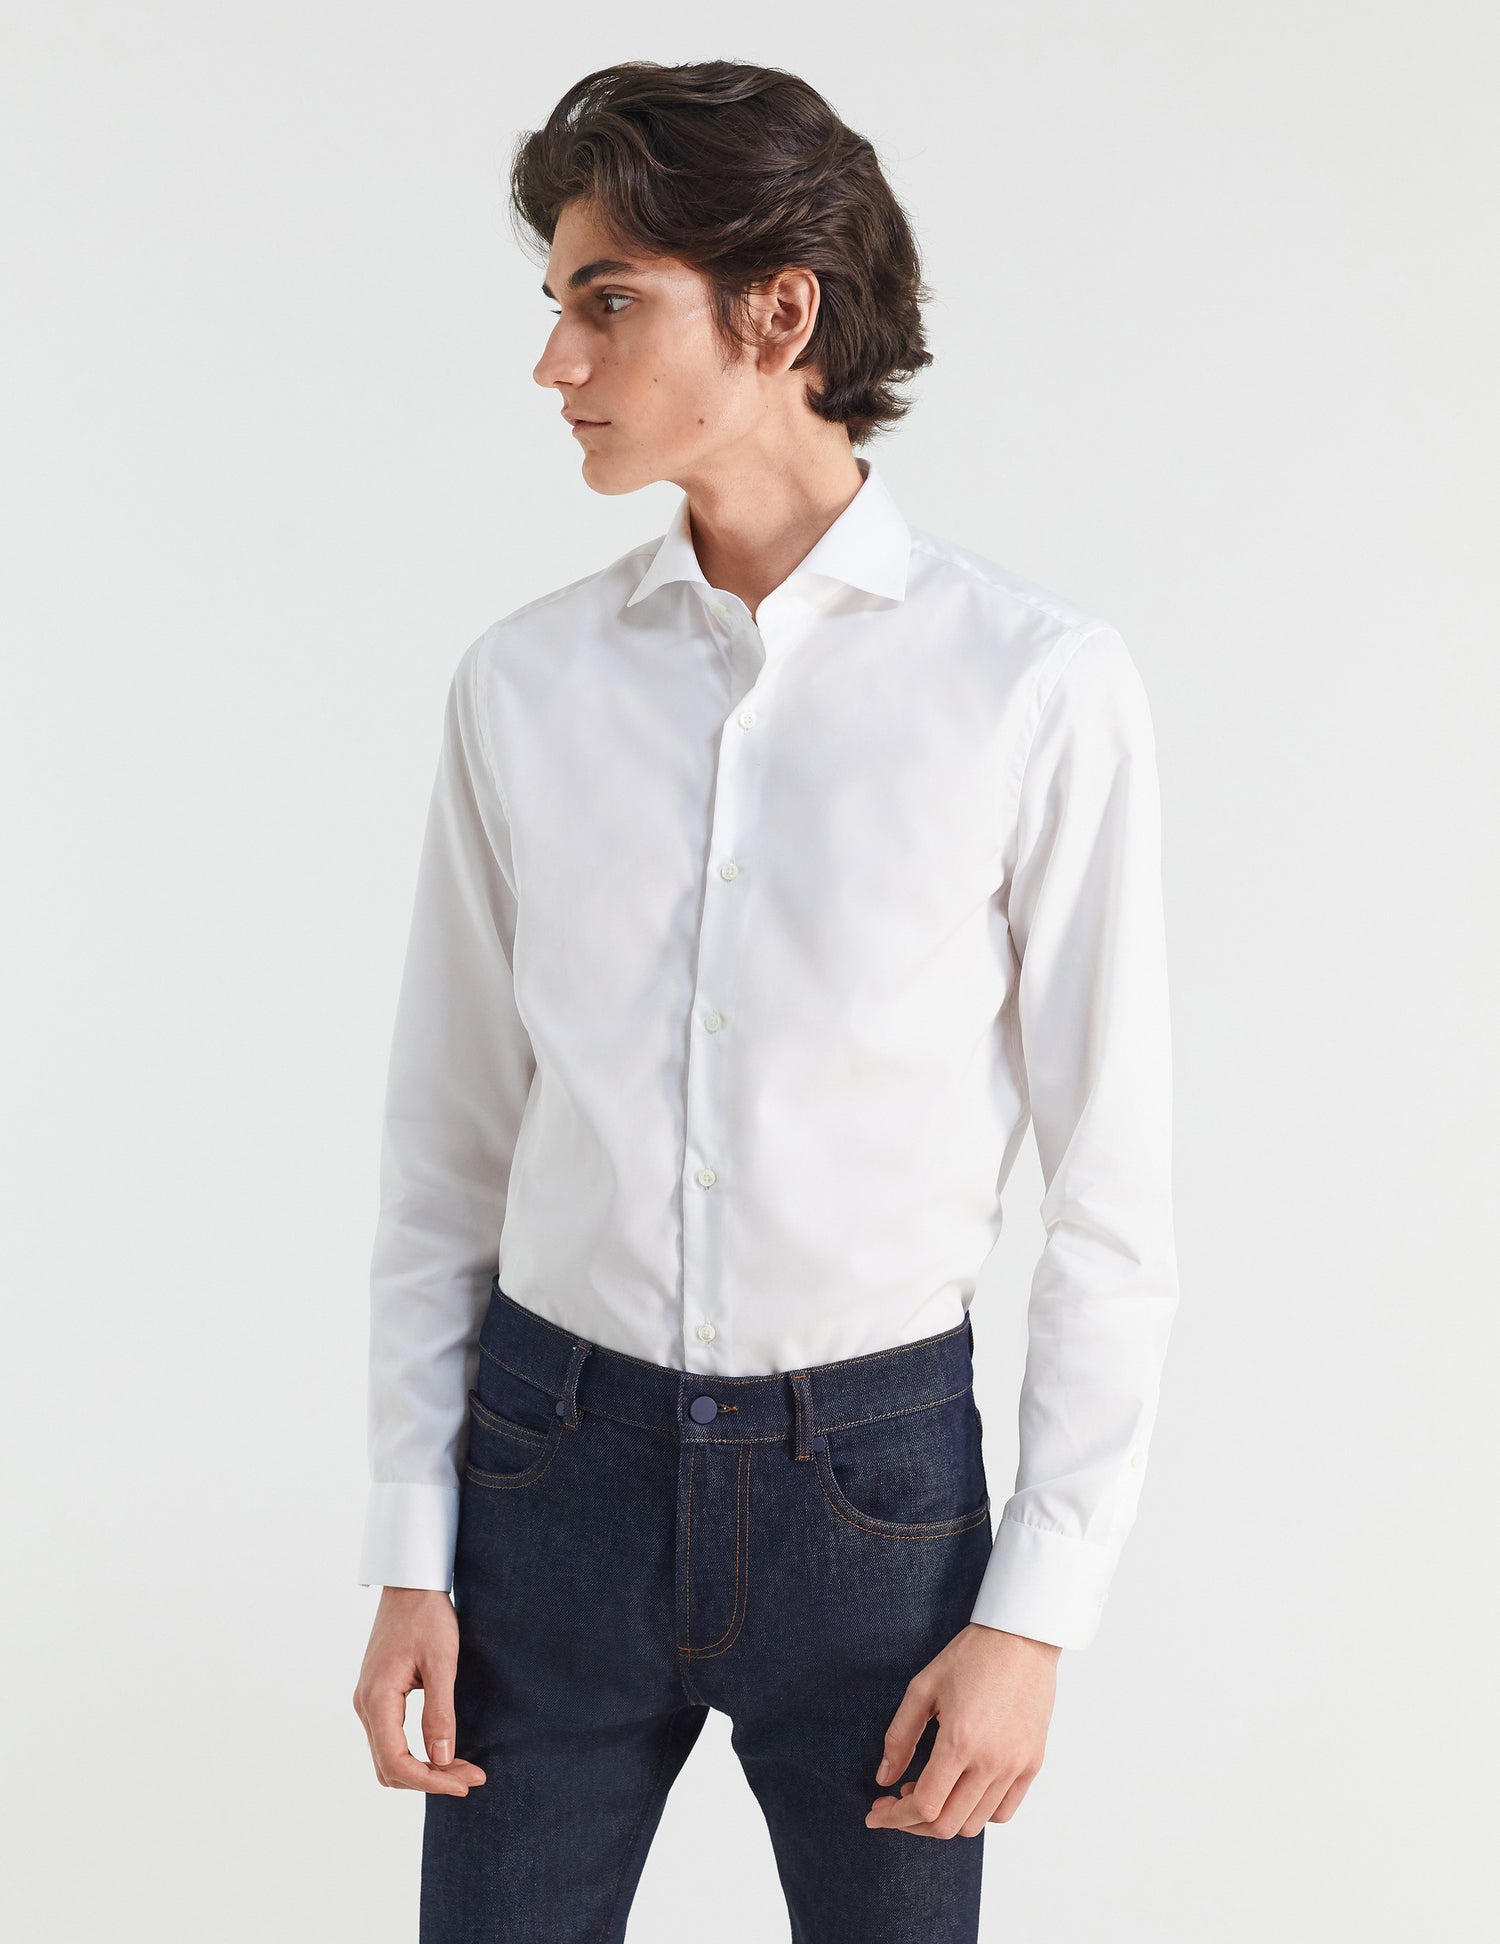 Fitted white wrinkle-free shirt - Poplin - Italian Collar#3